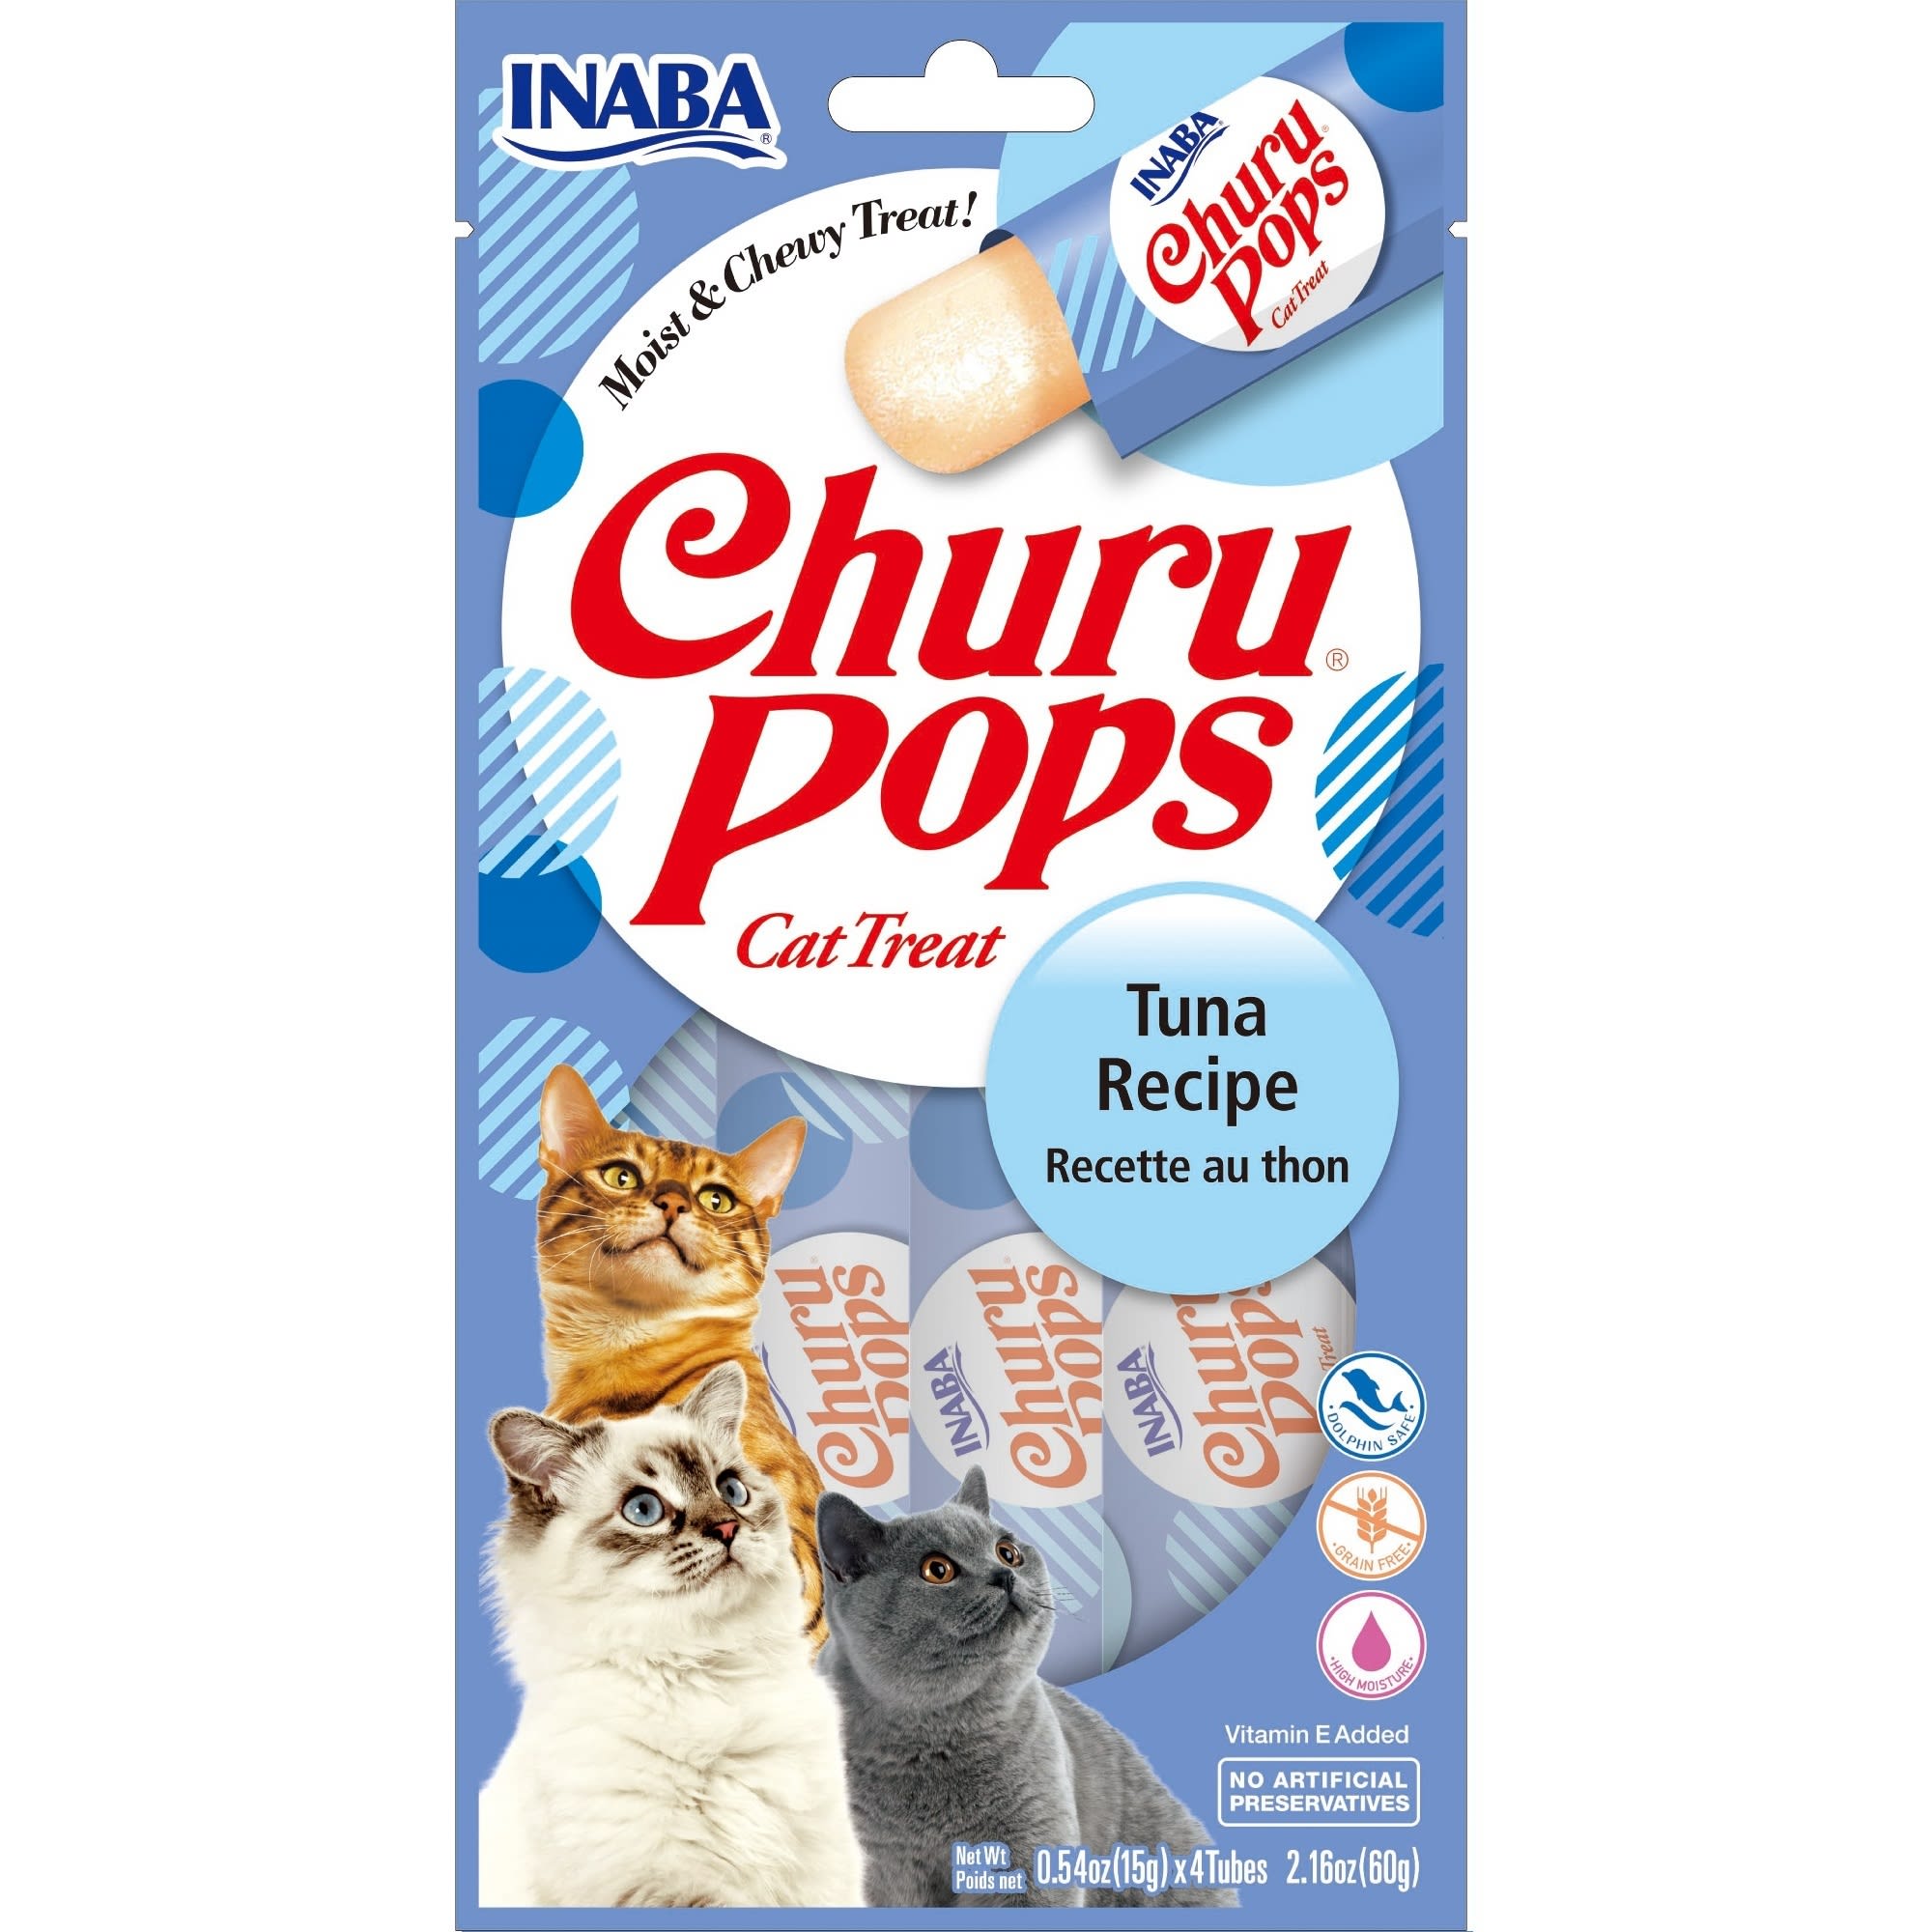 Inaba Churu Pops Tuna Receipe Cat Treats, 2.16 oz., Count of 24 Petco